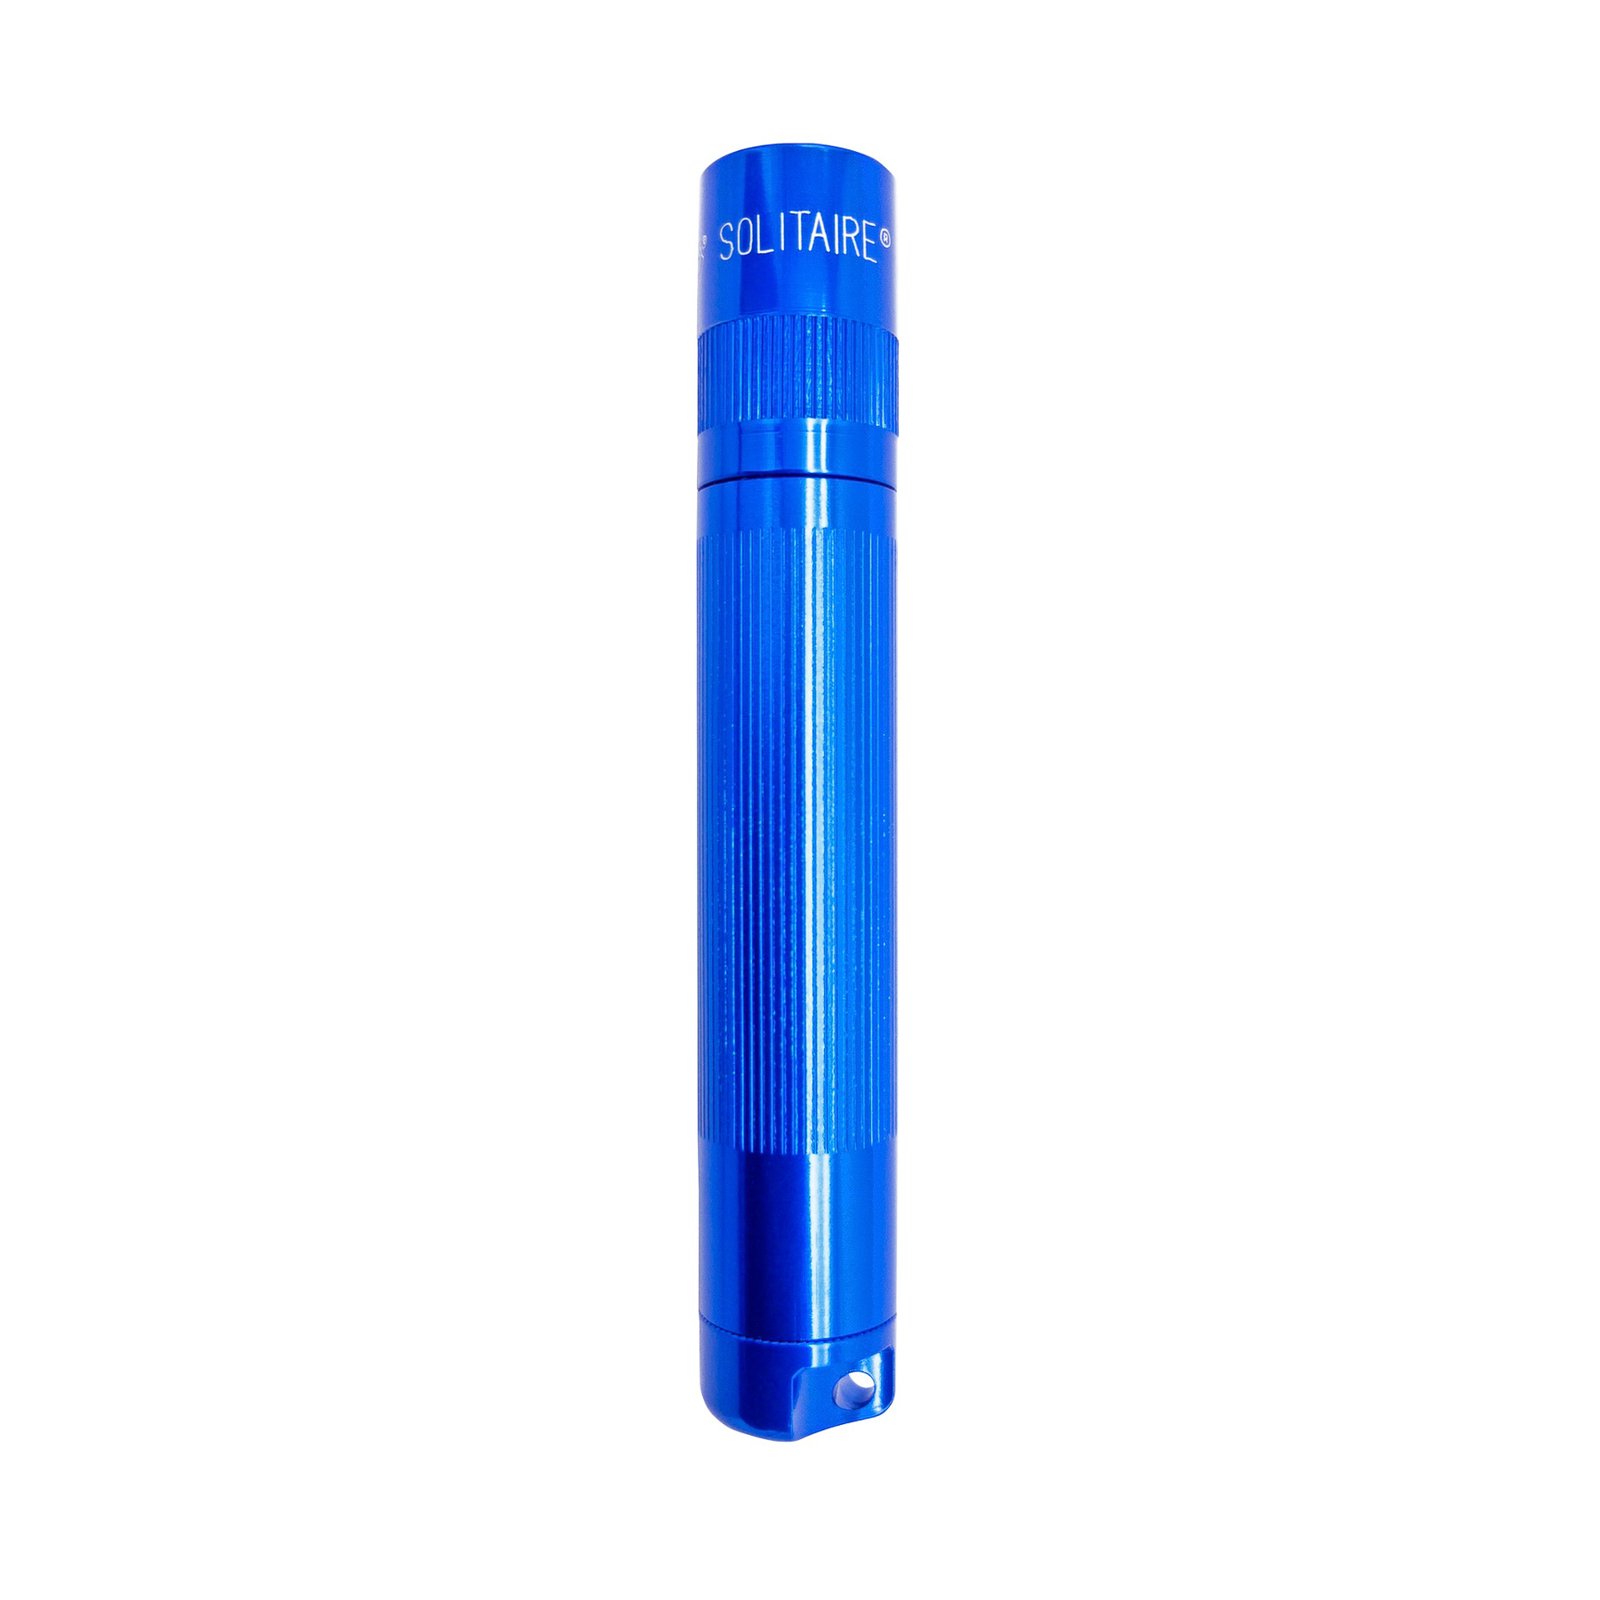 Maglite Lampe de poche au xénon Solitaire 1-Cell AAA, Box, bleu